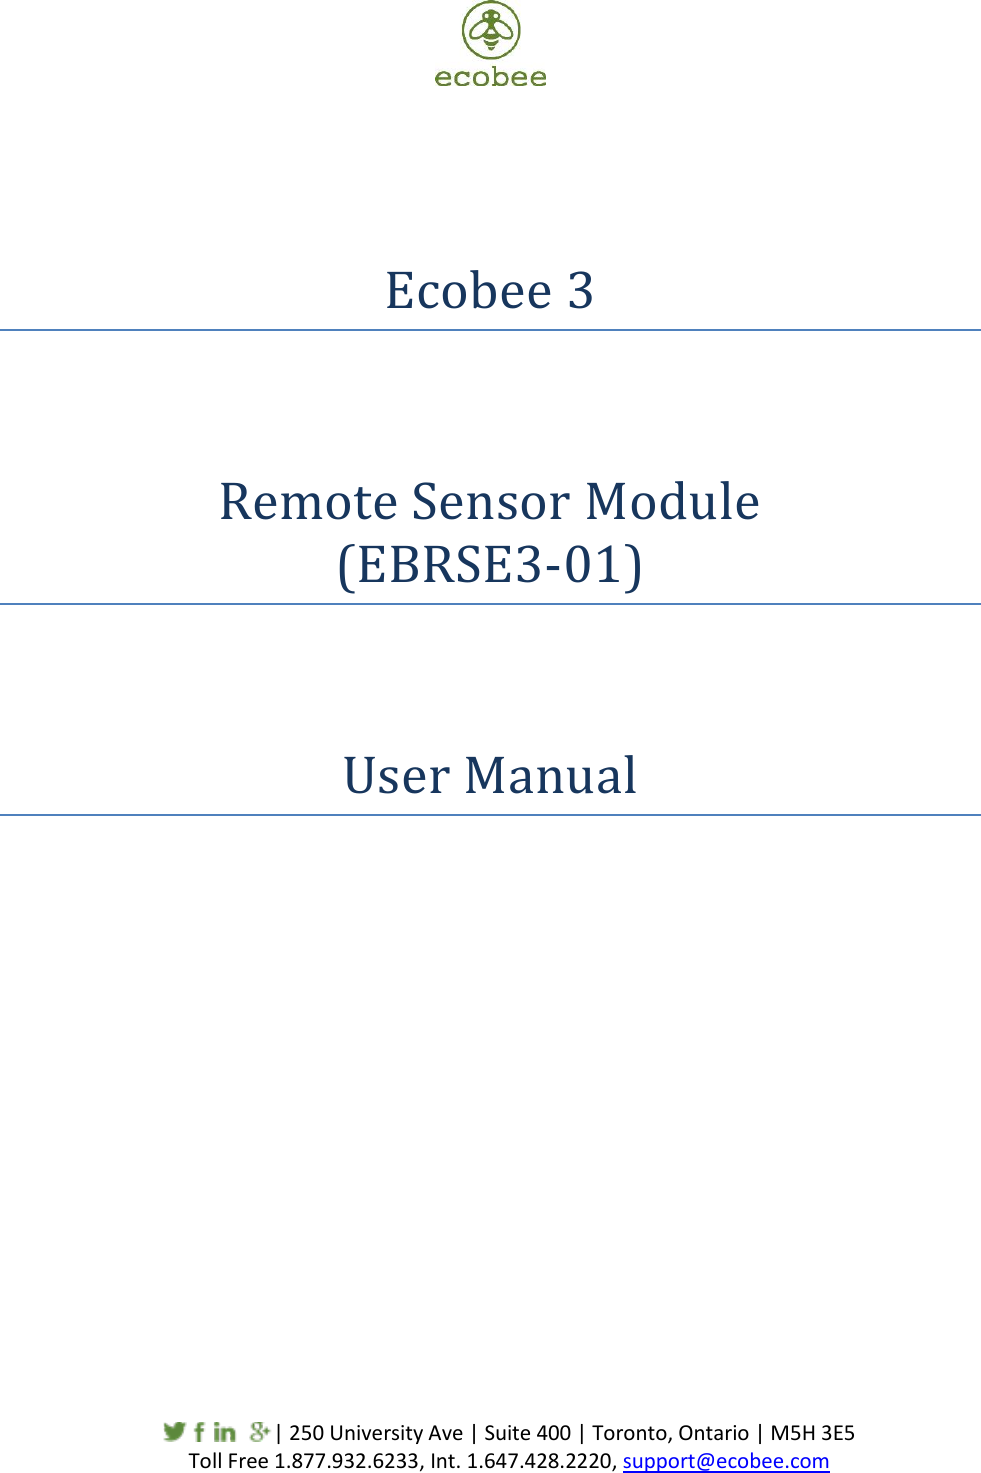     | 250 University Ave | Suite 400 | Toronto, Ontario | M5H 3E5                                                   Toll Free 1.877.932.6233, Int. 1.647.428.2220, support@ecobee.com     Ecobee 3   Remote Sensor Module  (EBRSE3-01)   User Manual            